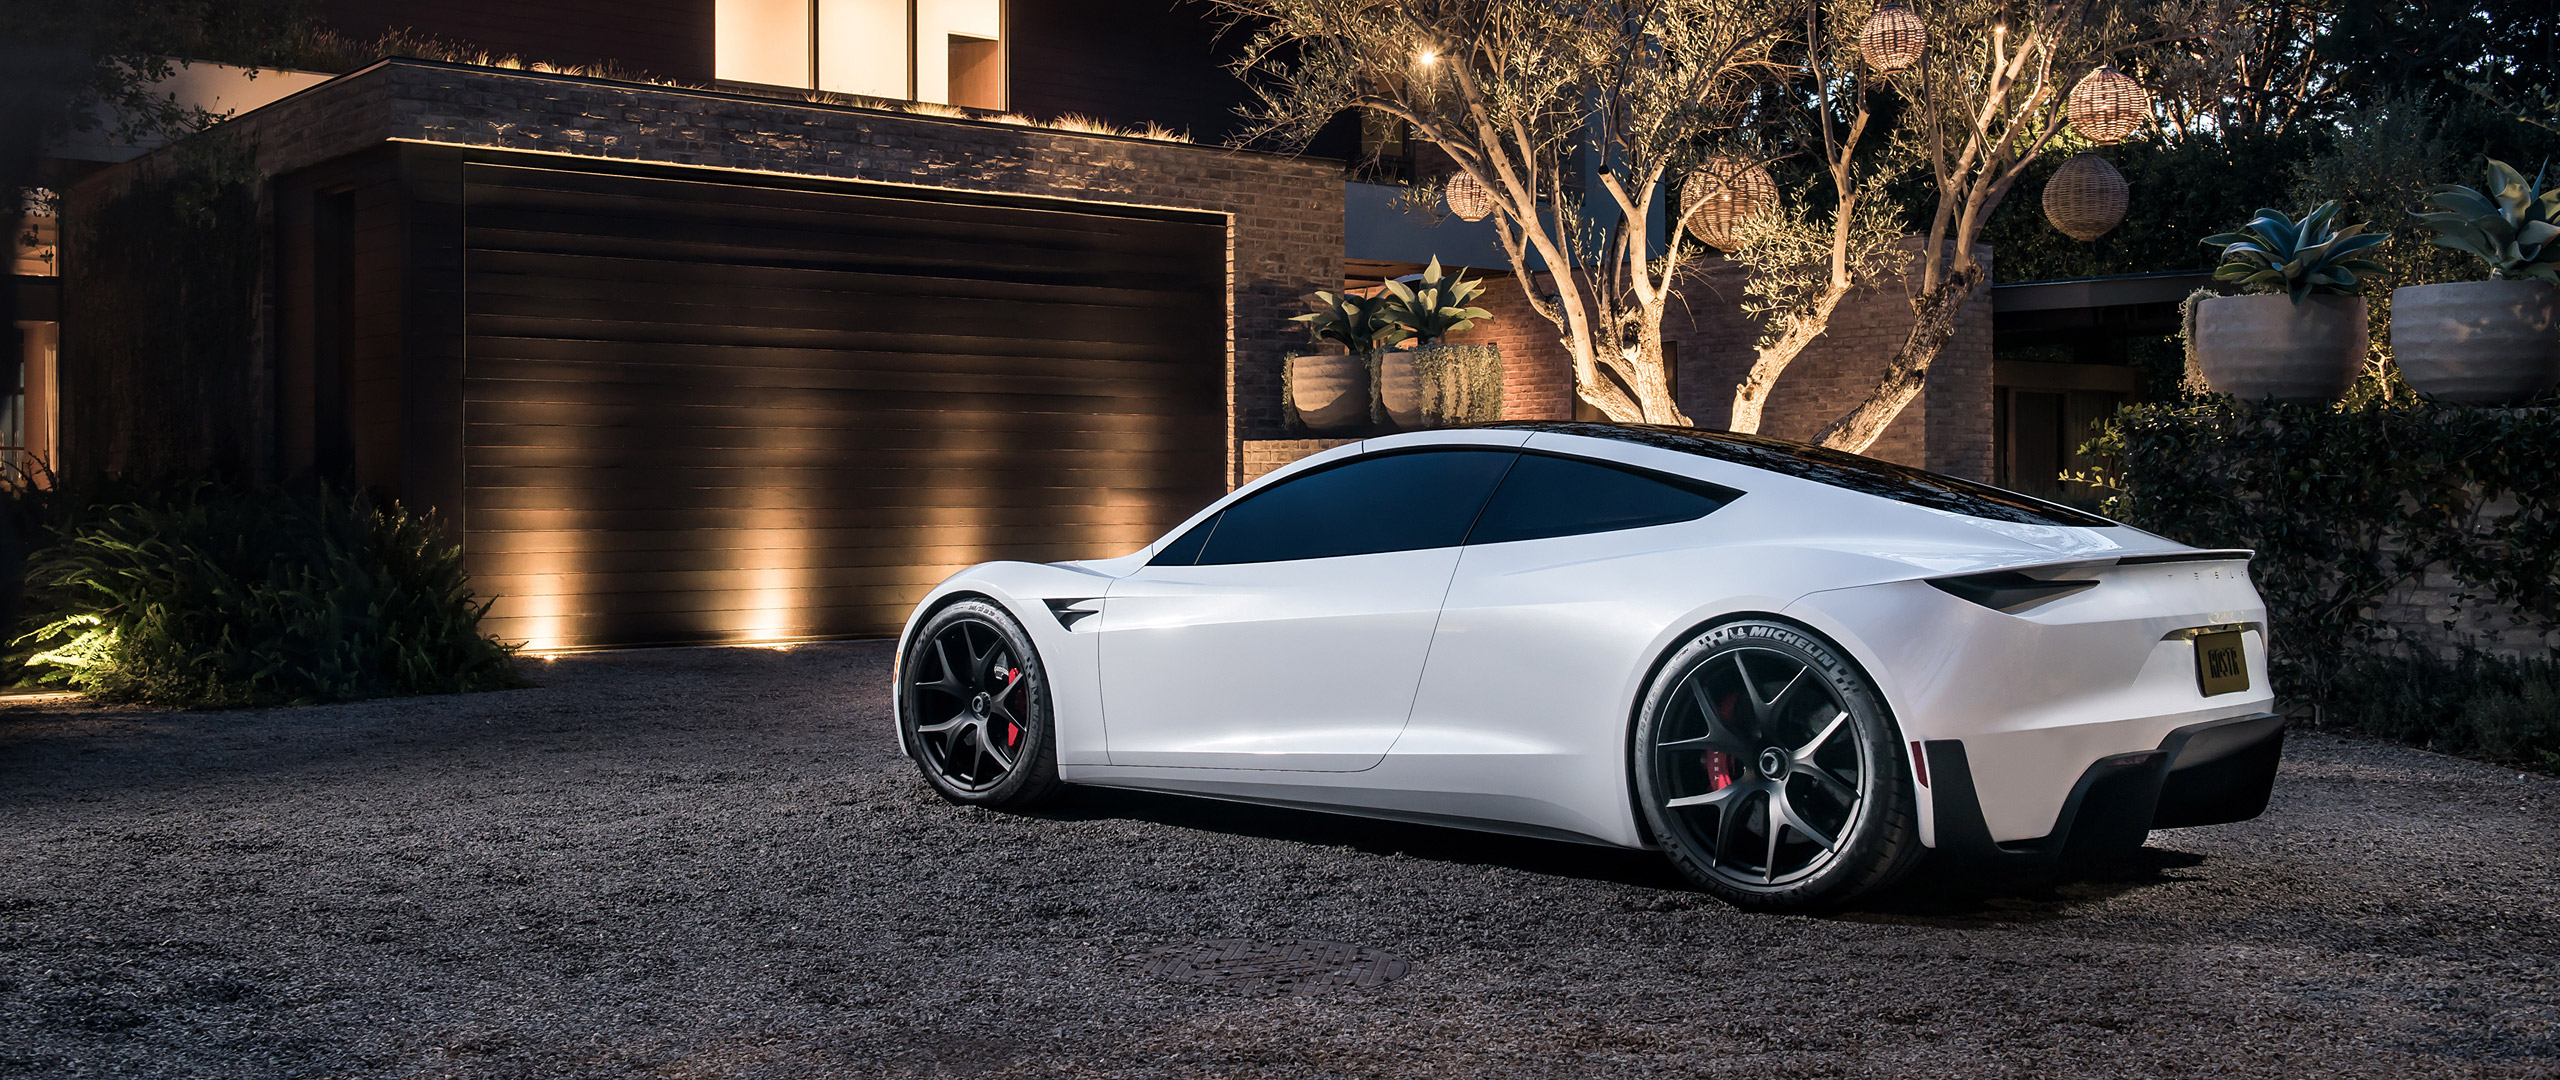  2020 Tesla Roadster Prototype Wallpaper.